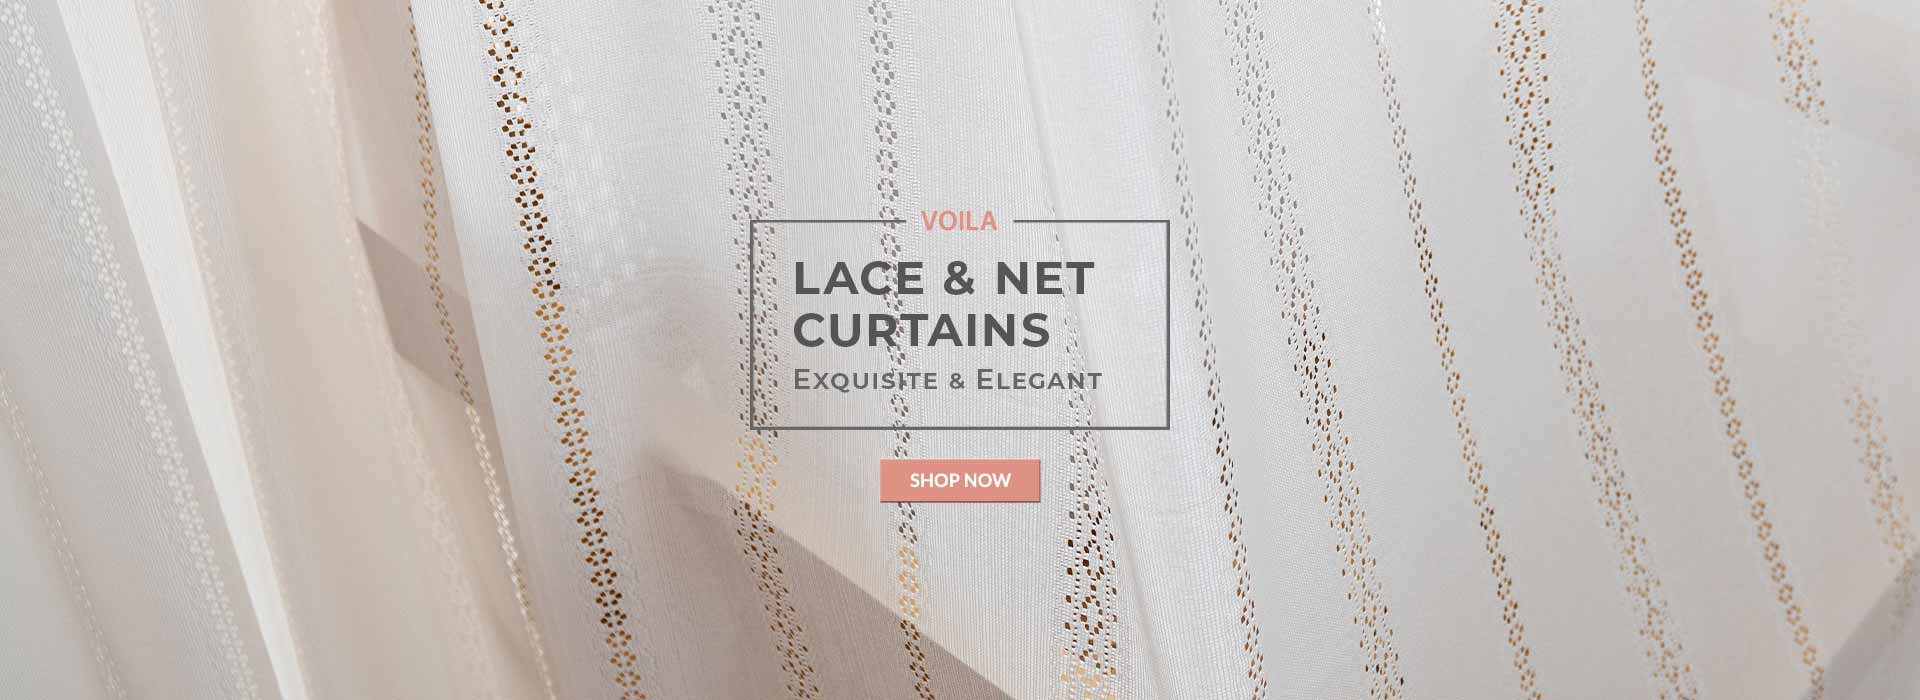 Lace & Net Curtains